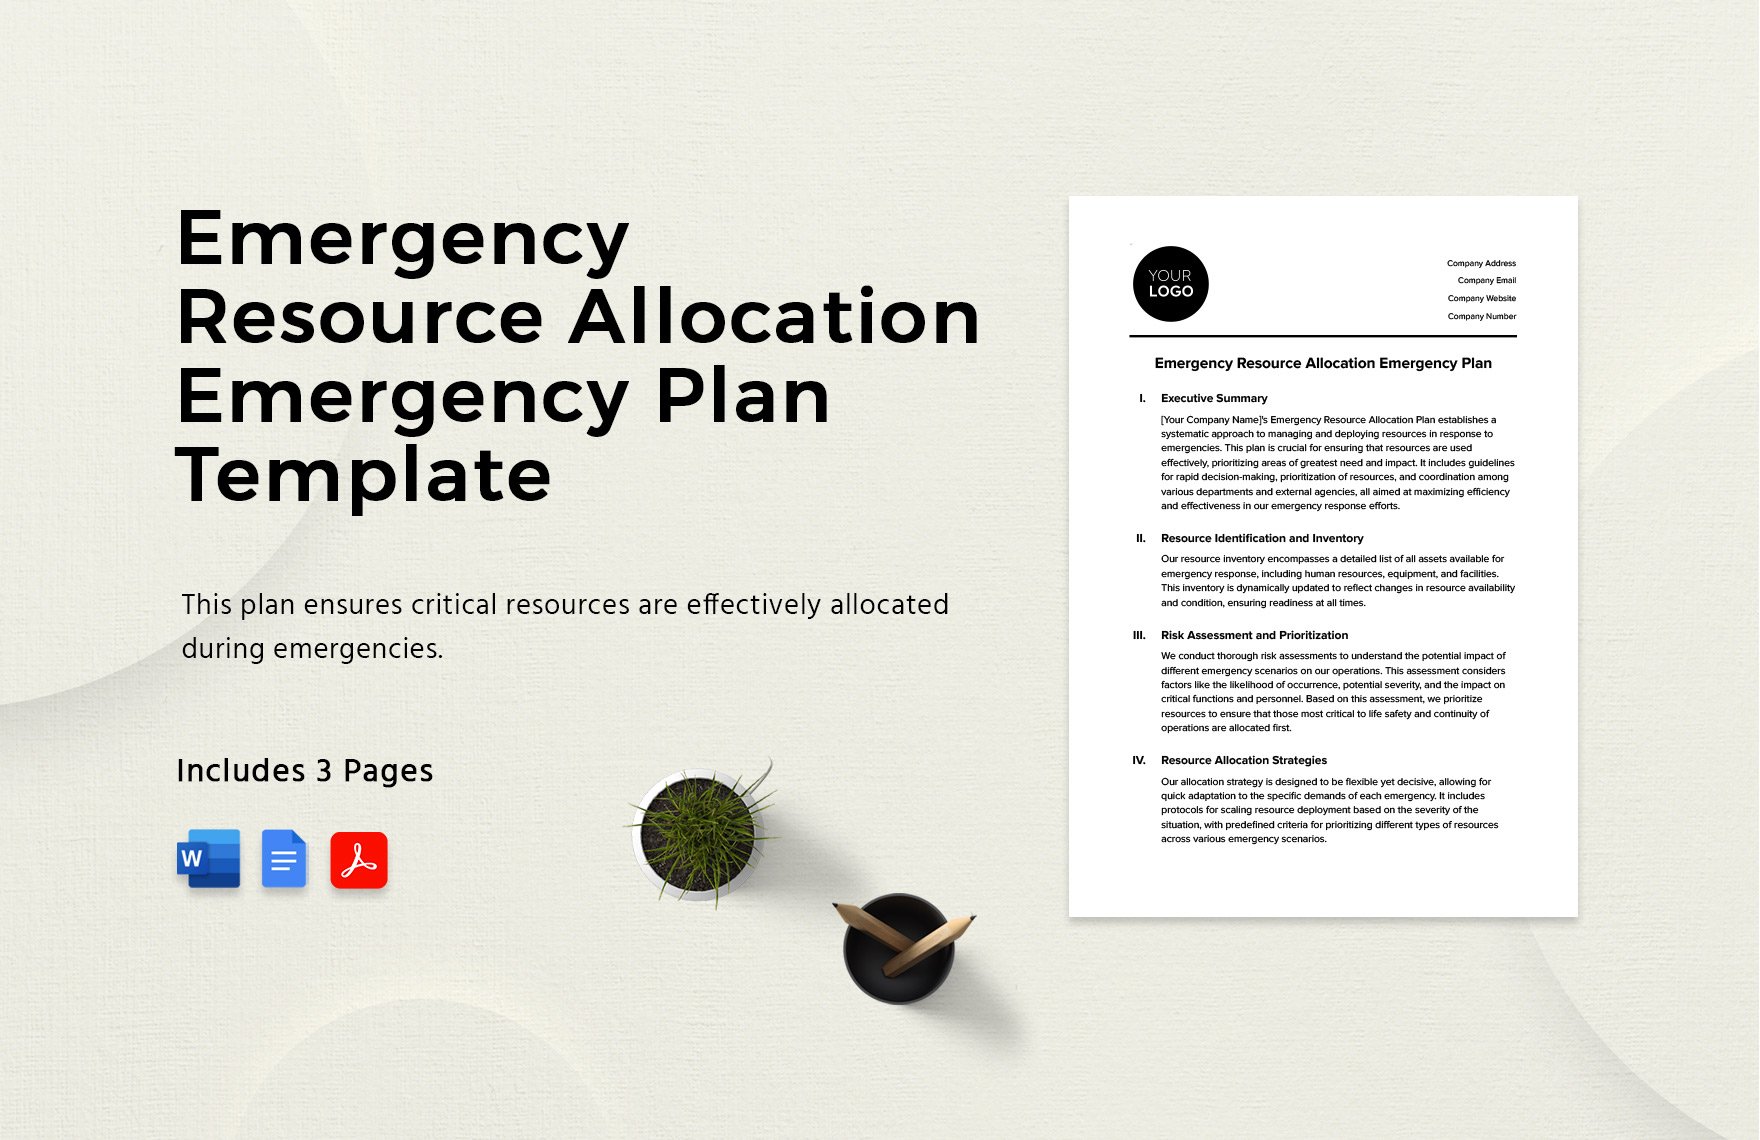 Emergency Resource Allocation Emergency Plan Template in Word, Google Docs, PDF